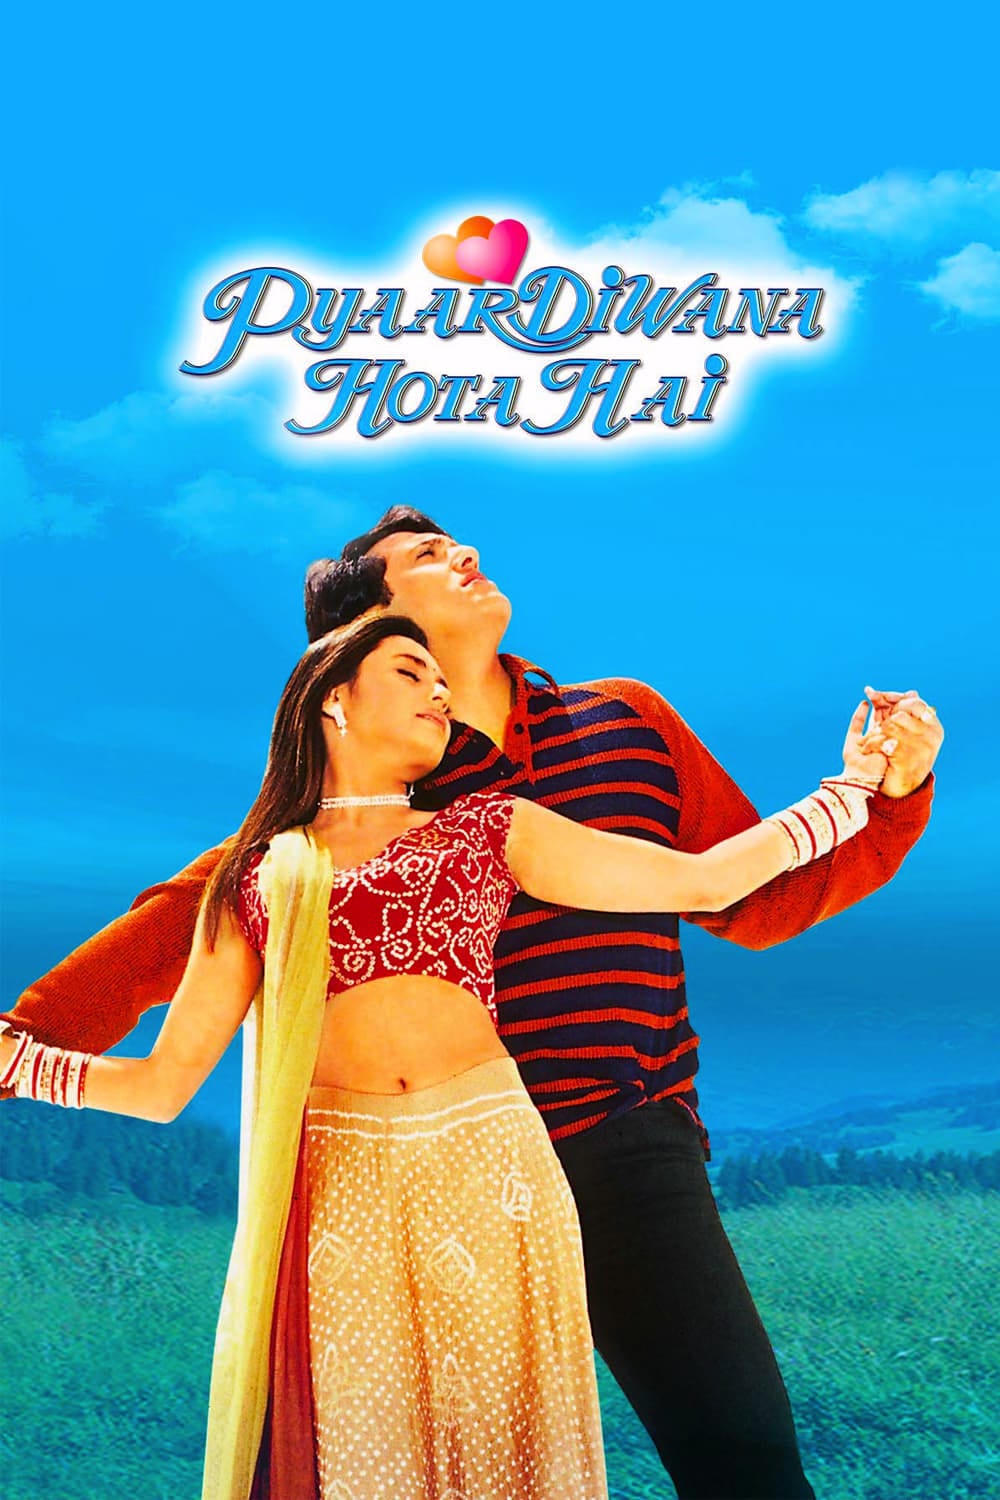 Poster for the movie "Pyaar Diwana Hota Hai"